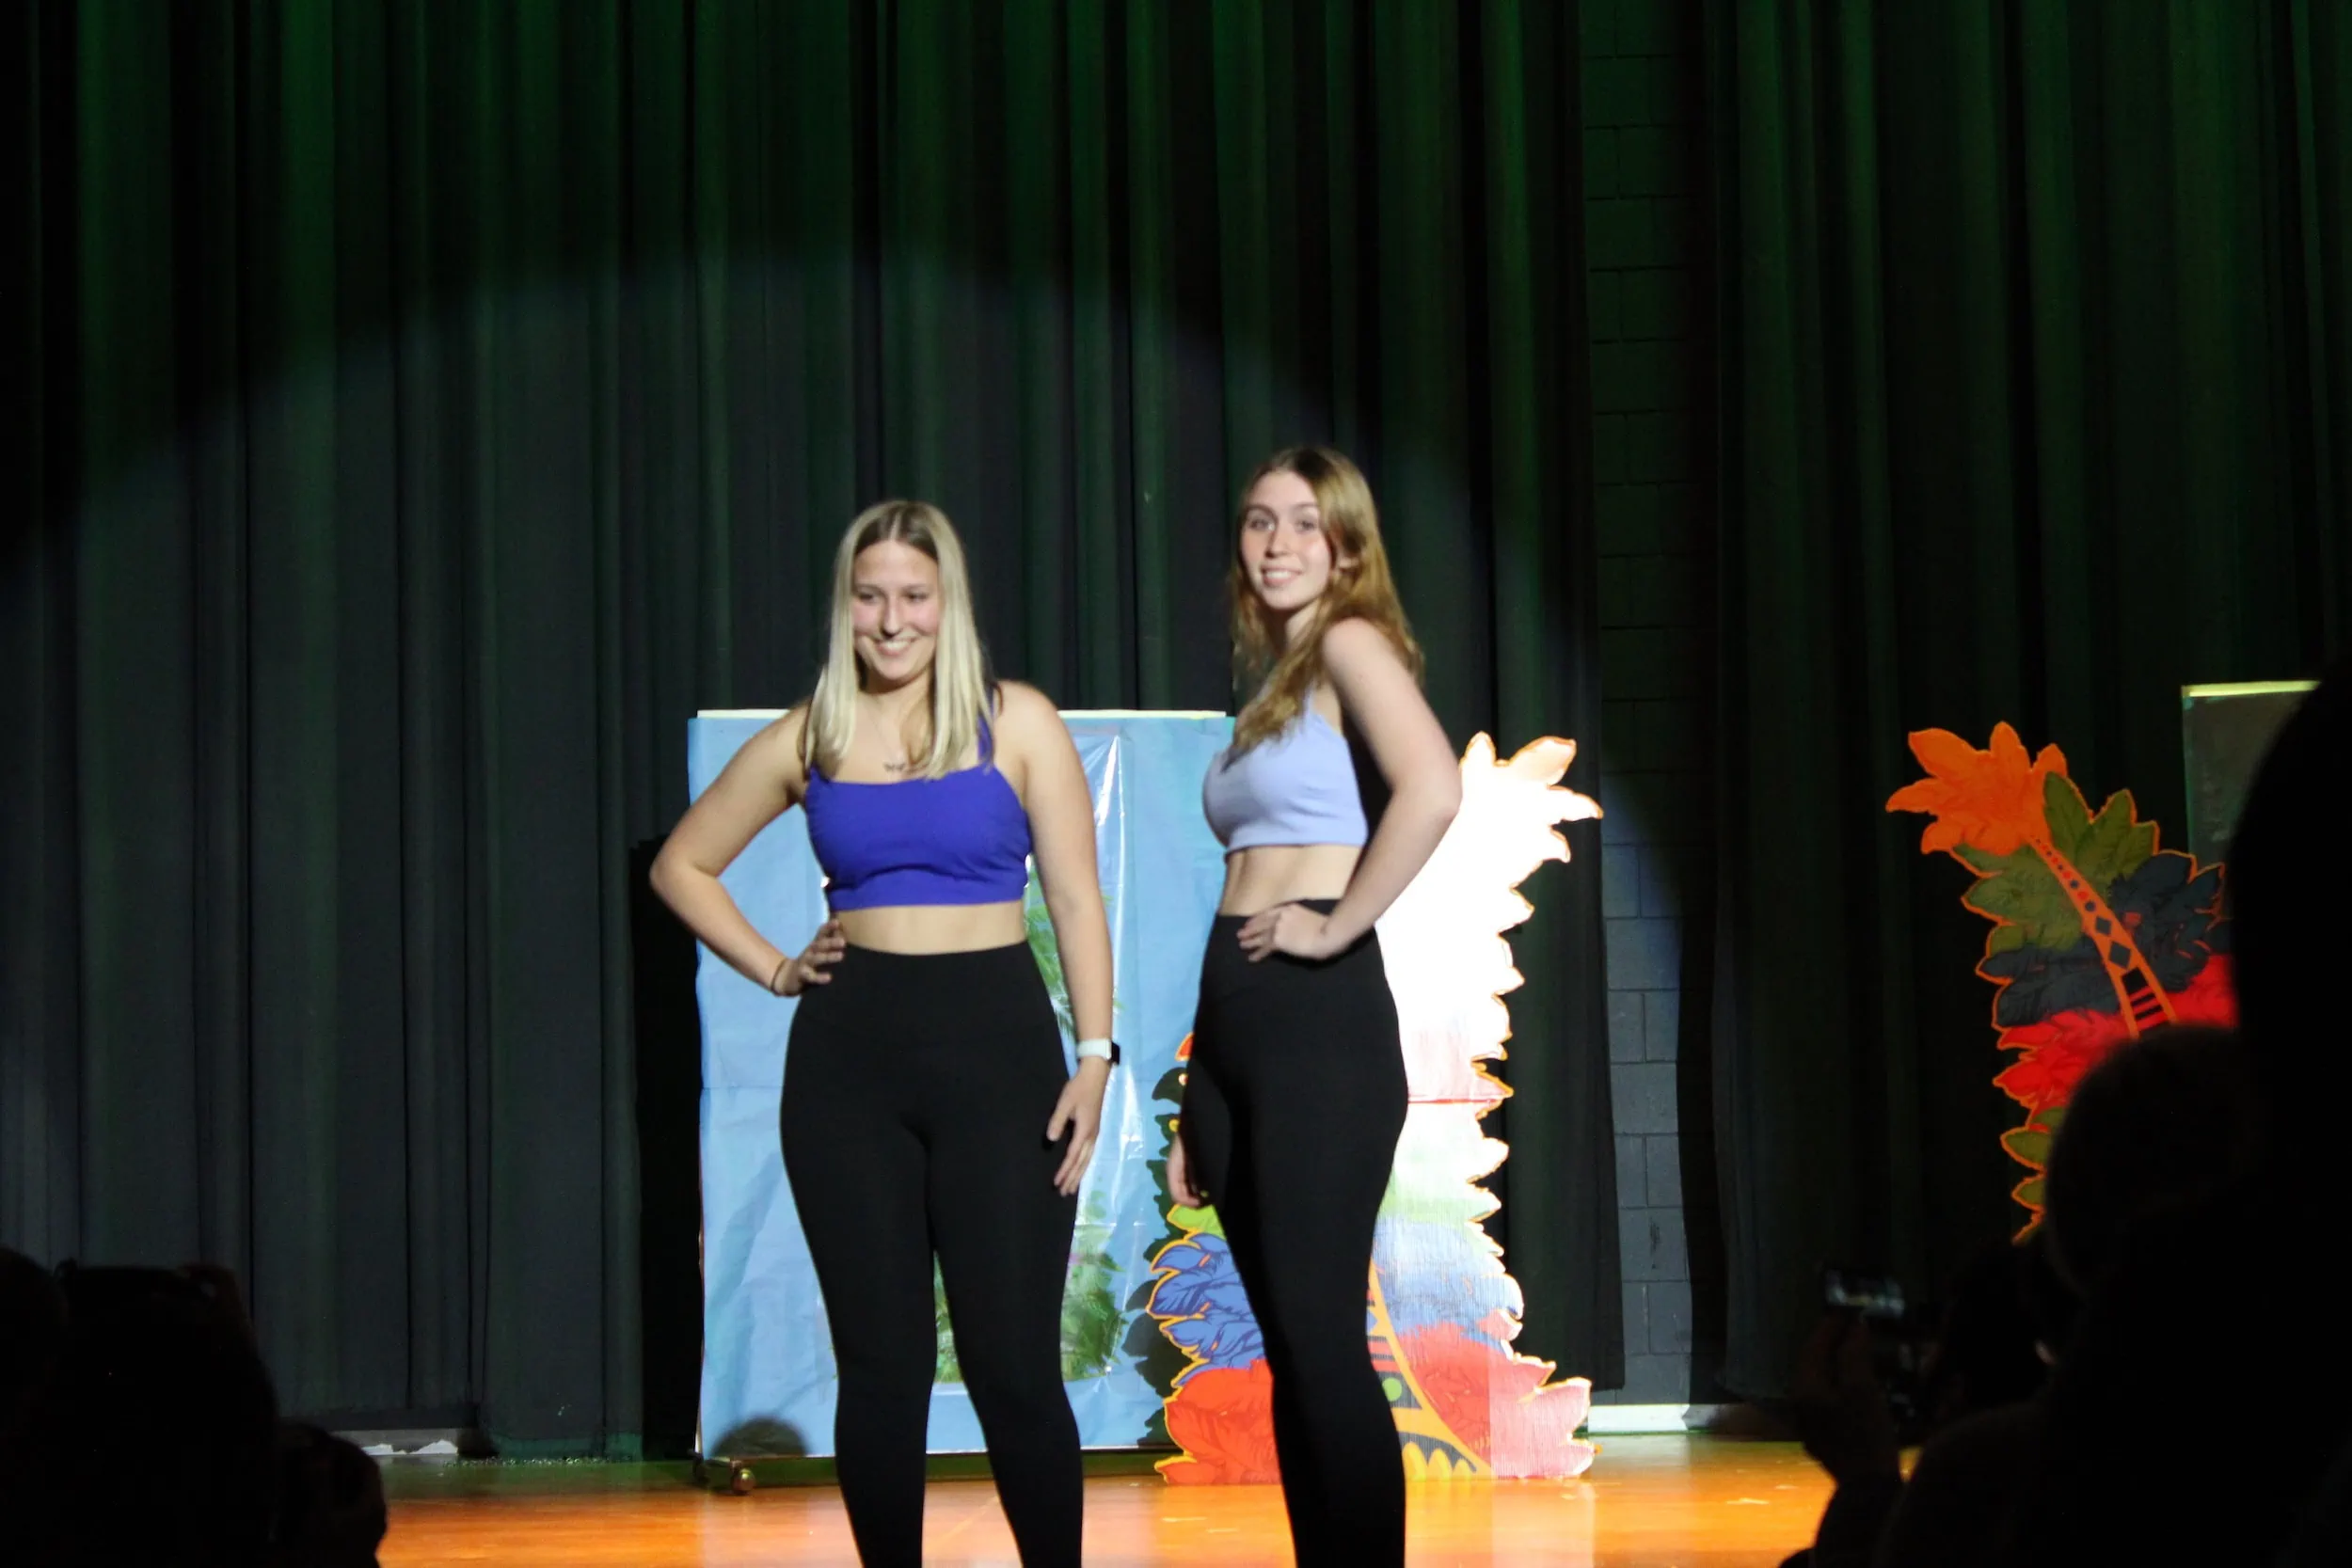 High school fashion show returns to the catwalk